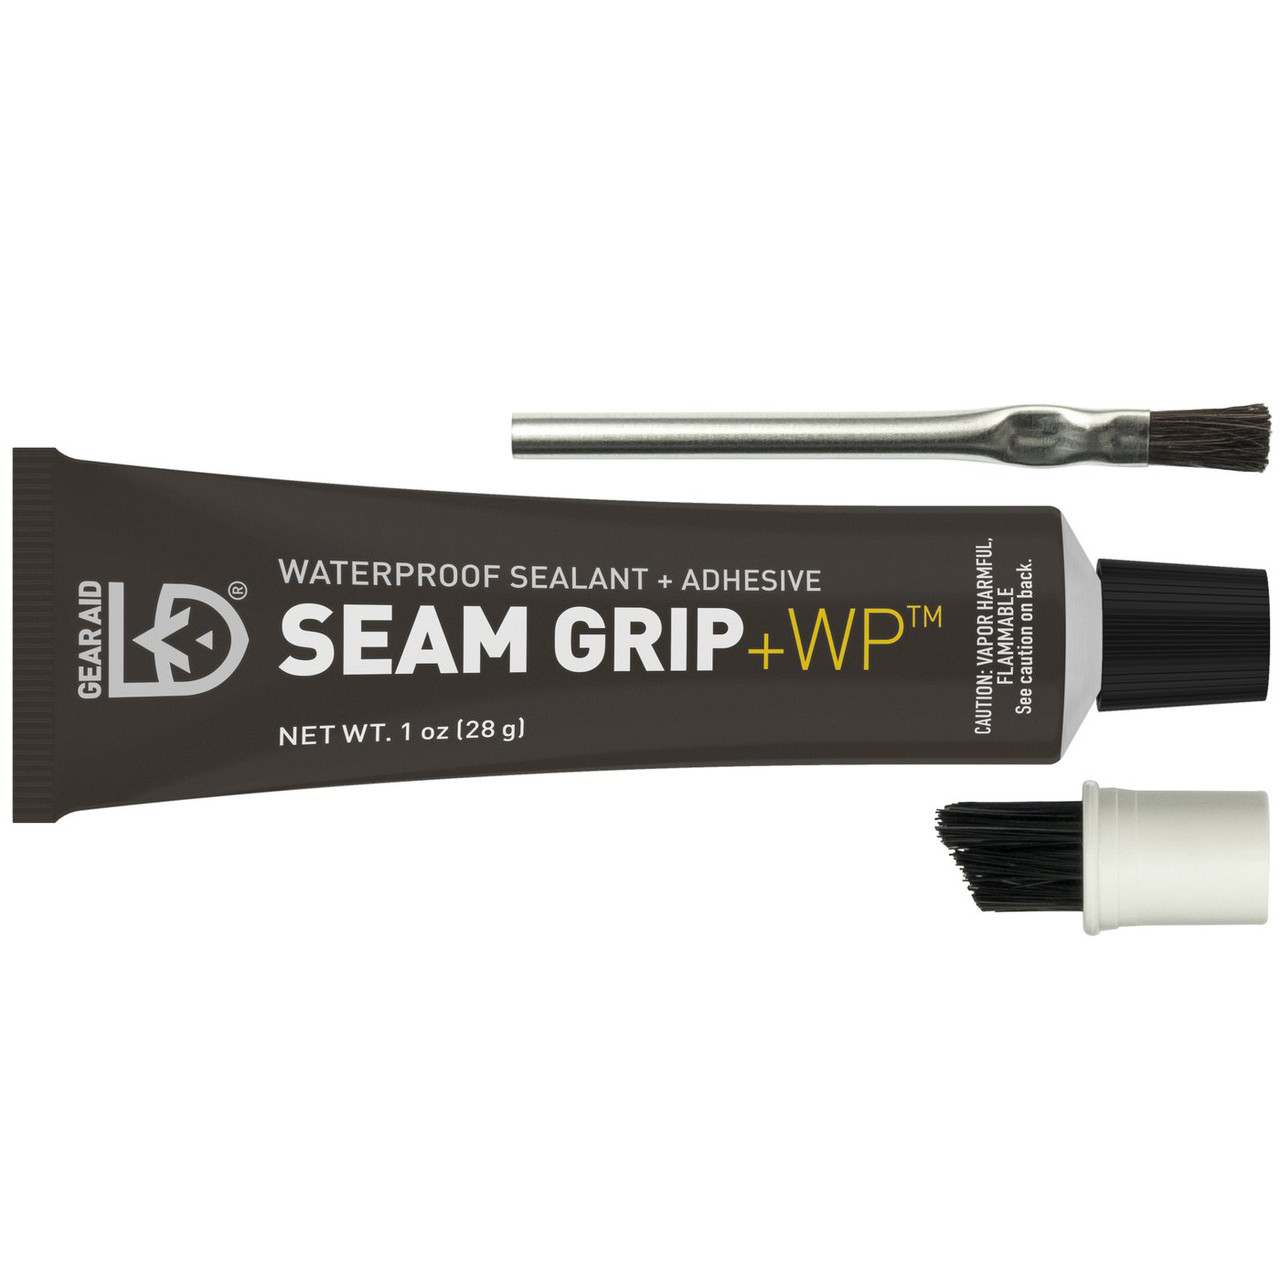 Gear Aid Seam Grip+WP™ Waterproof Sealant & Adhesive | Litesmith